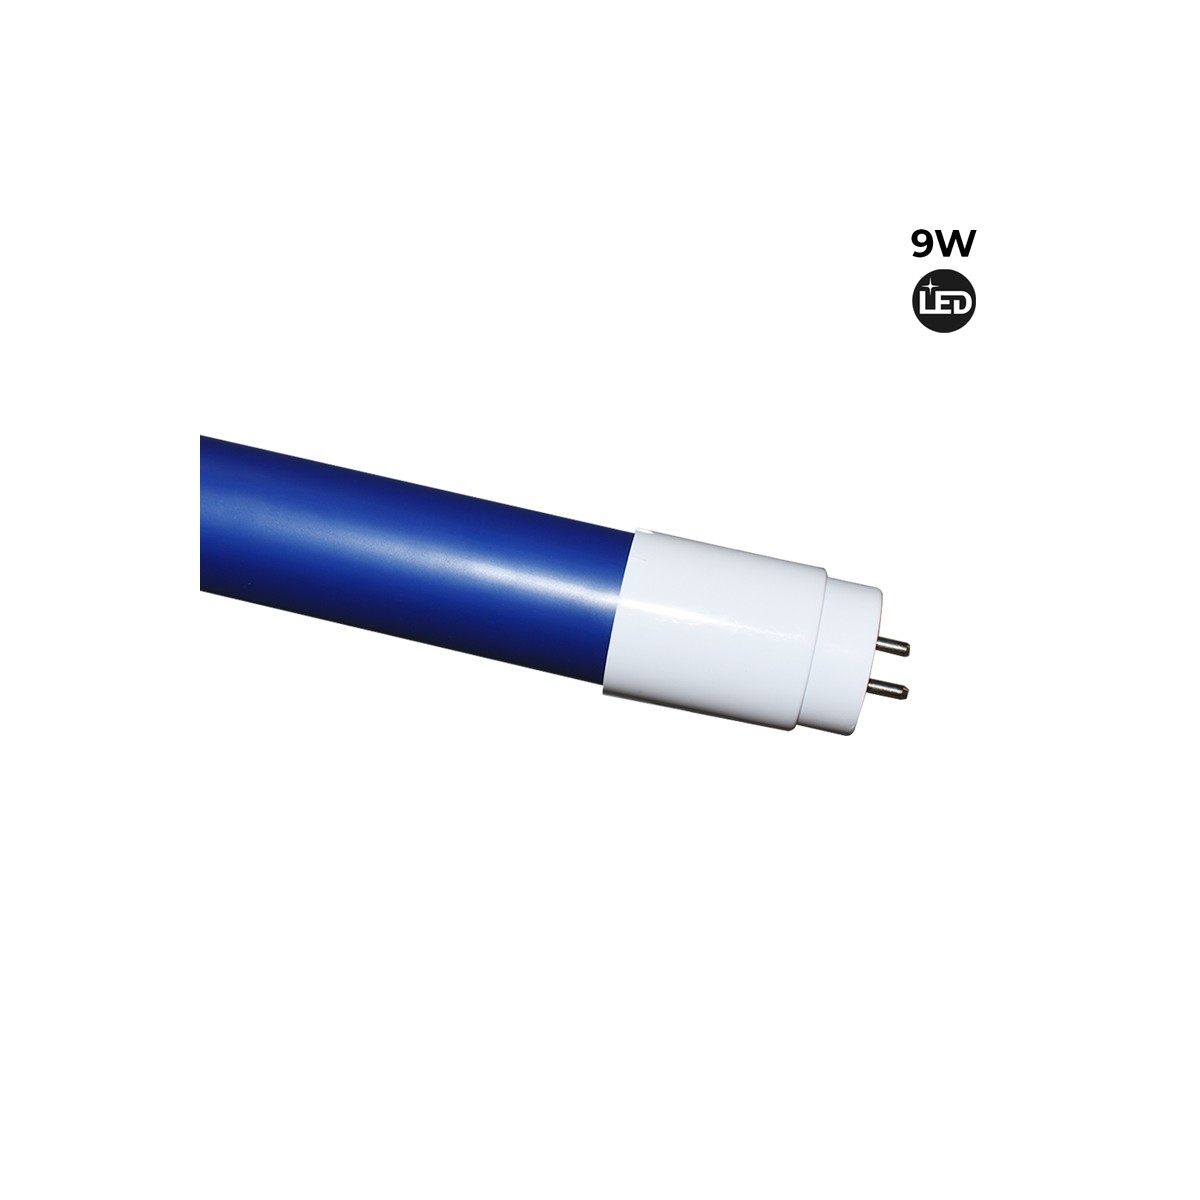 LED tube T8 60cm blue color 9W